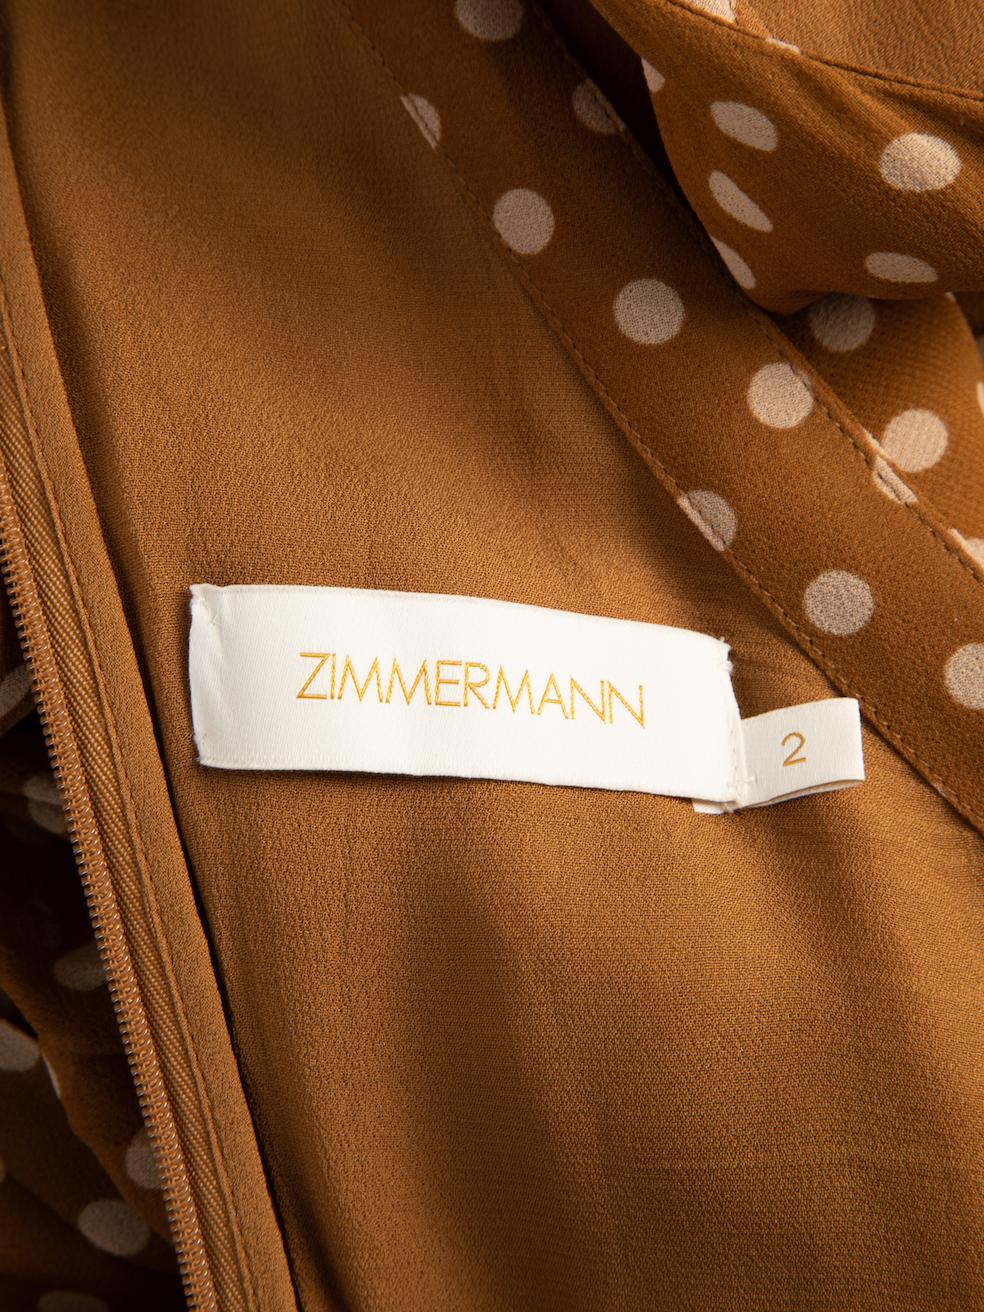 zimmermann brown polka dot dress